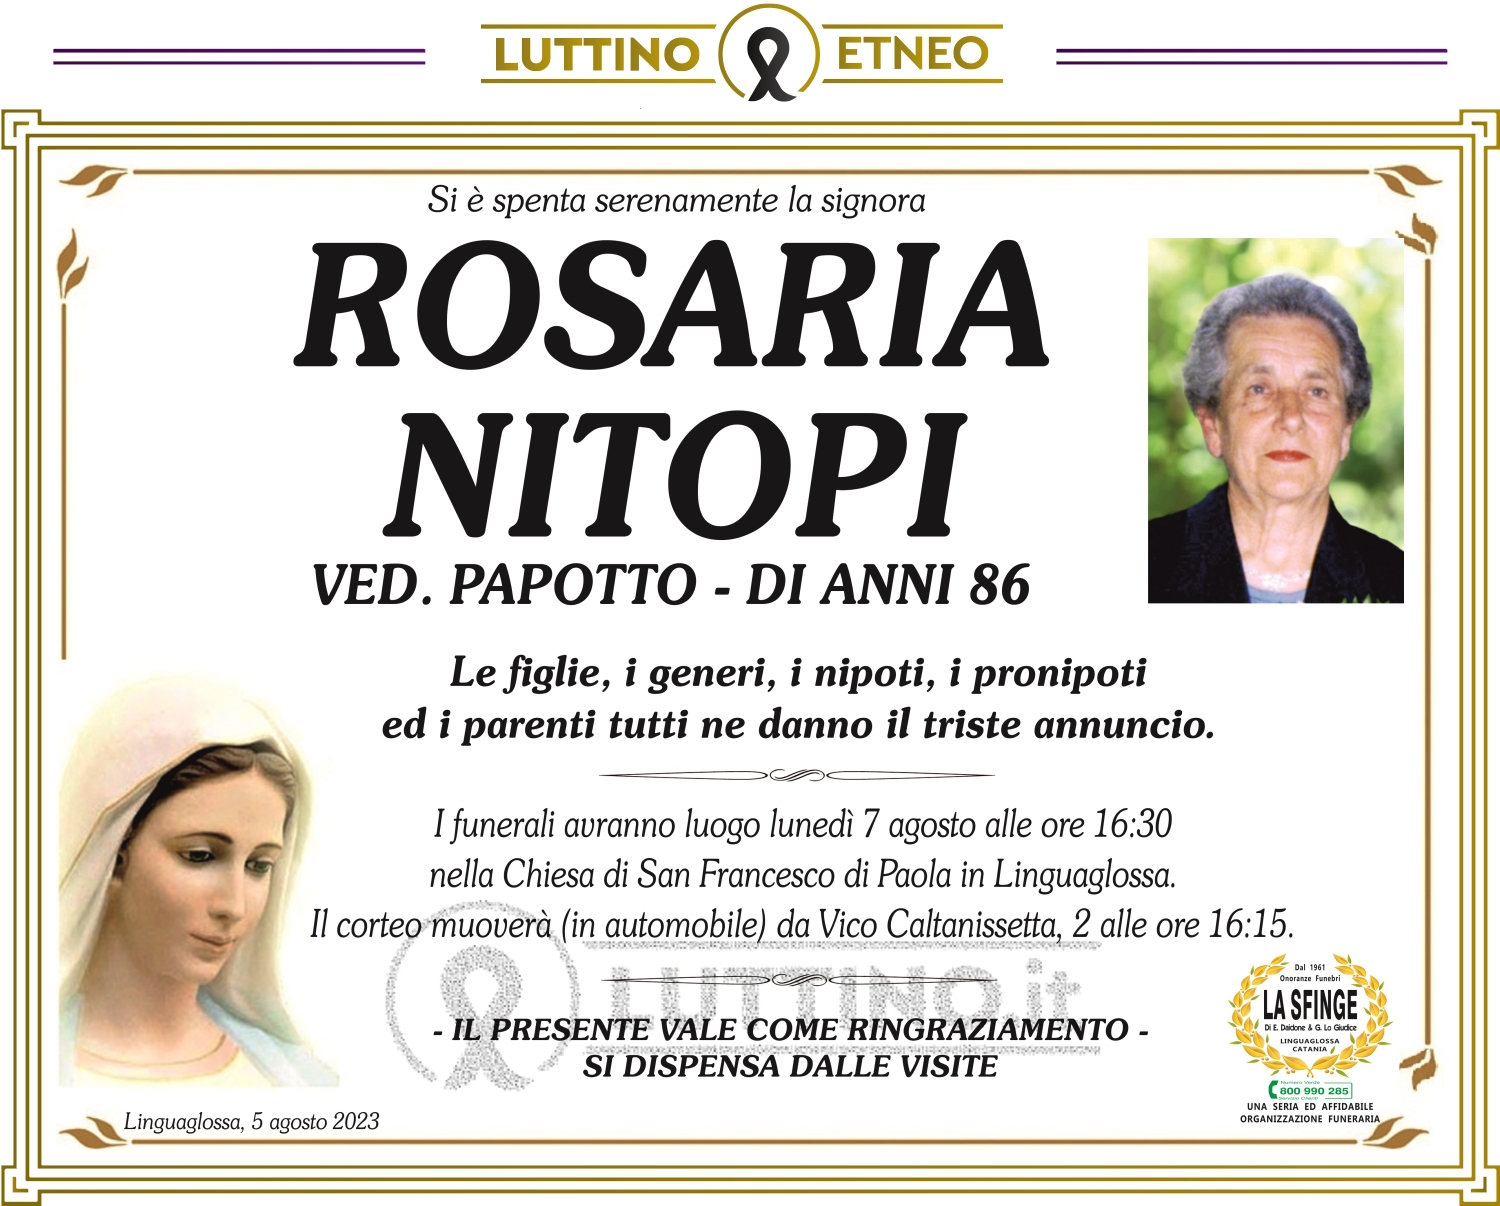 Rosaria Nitopi